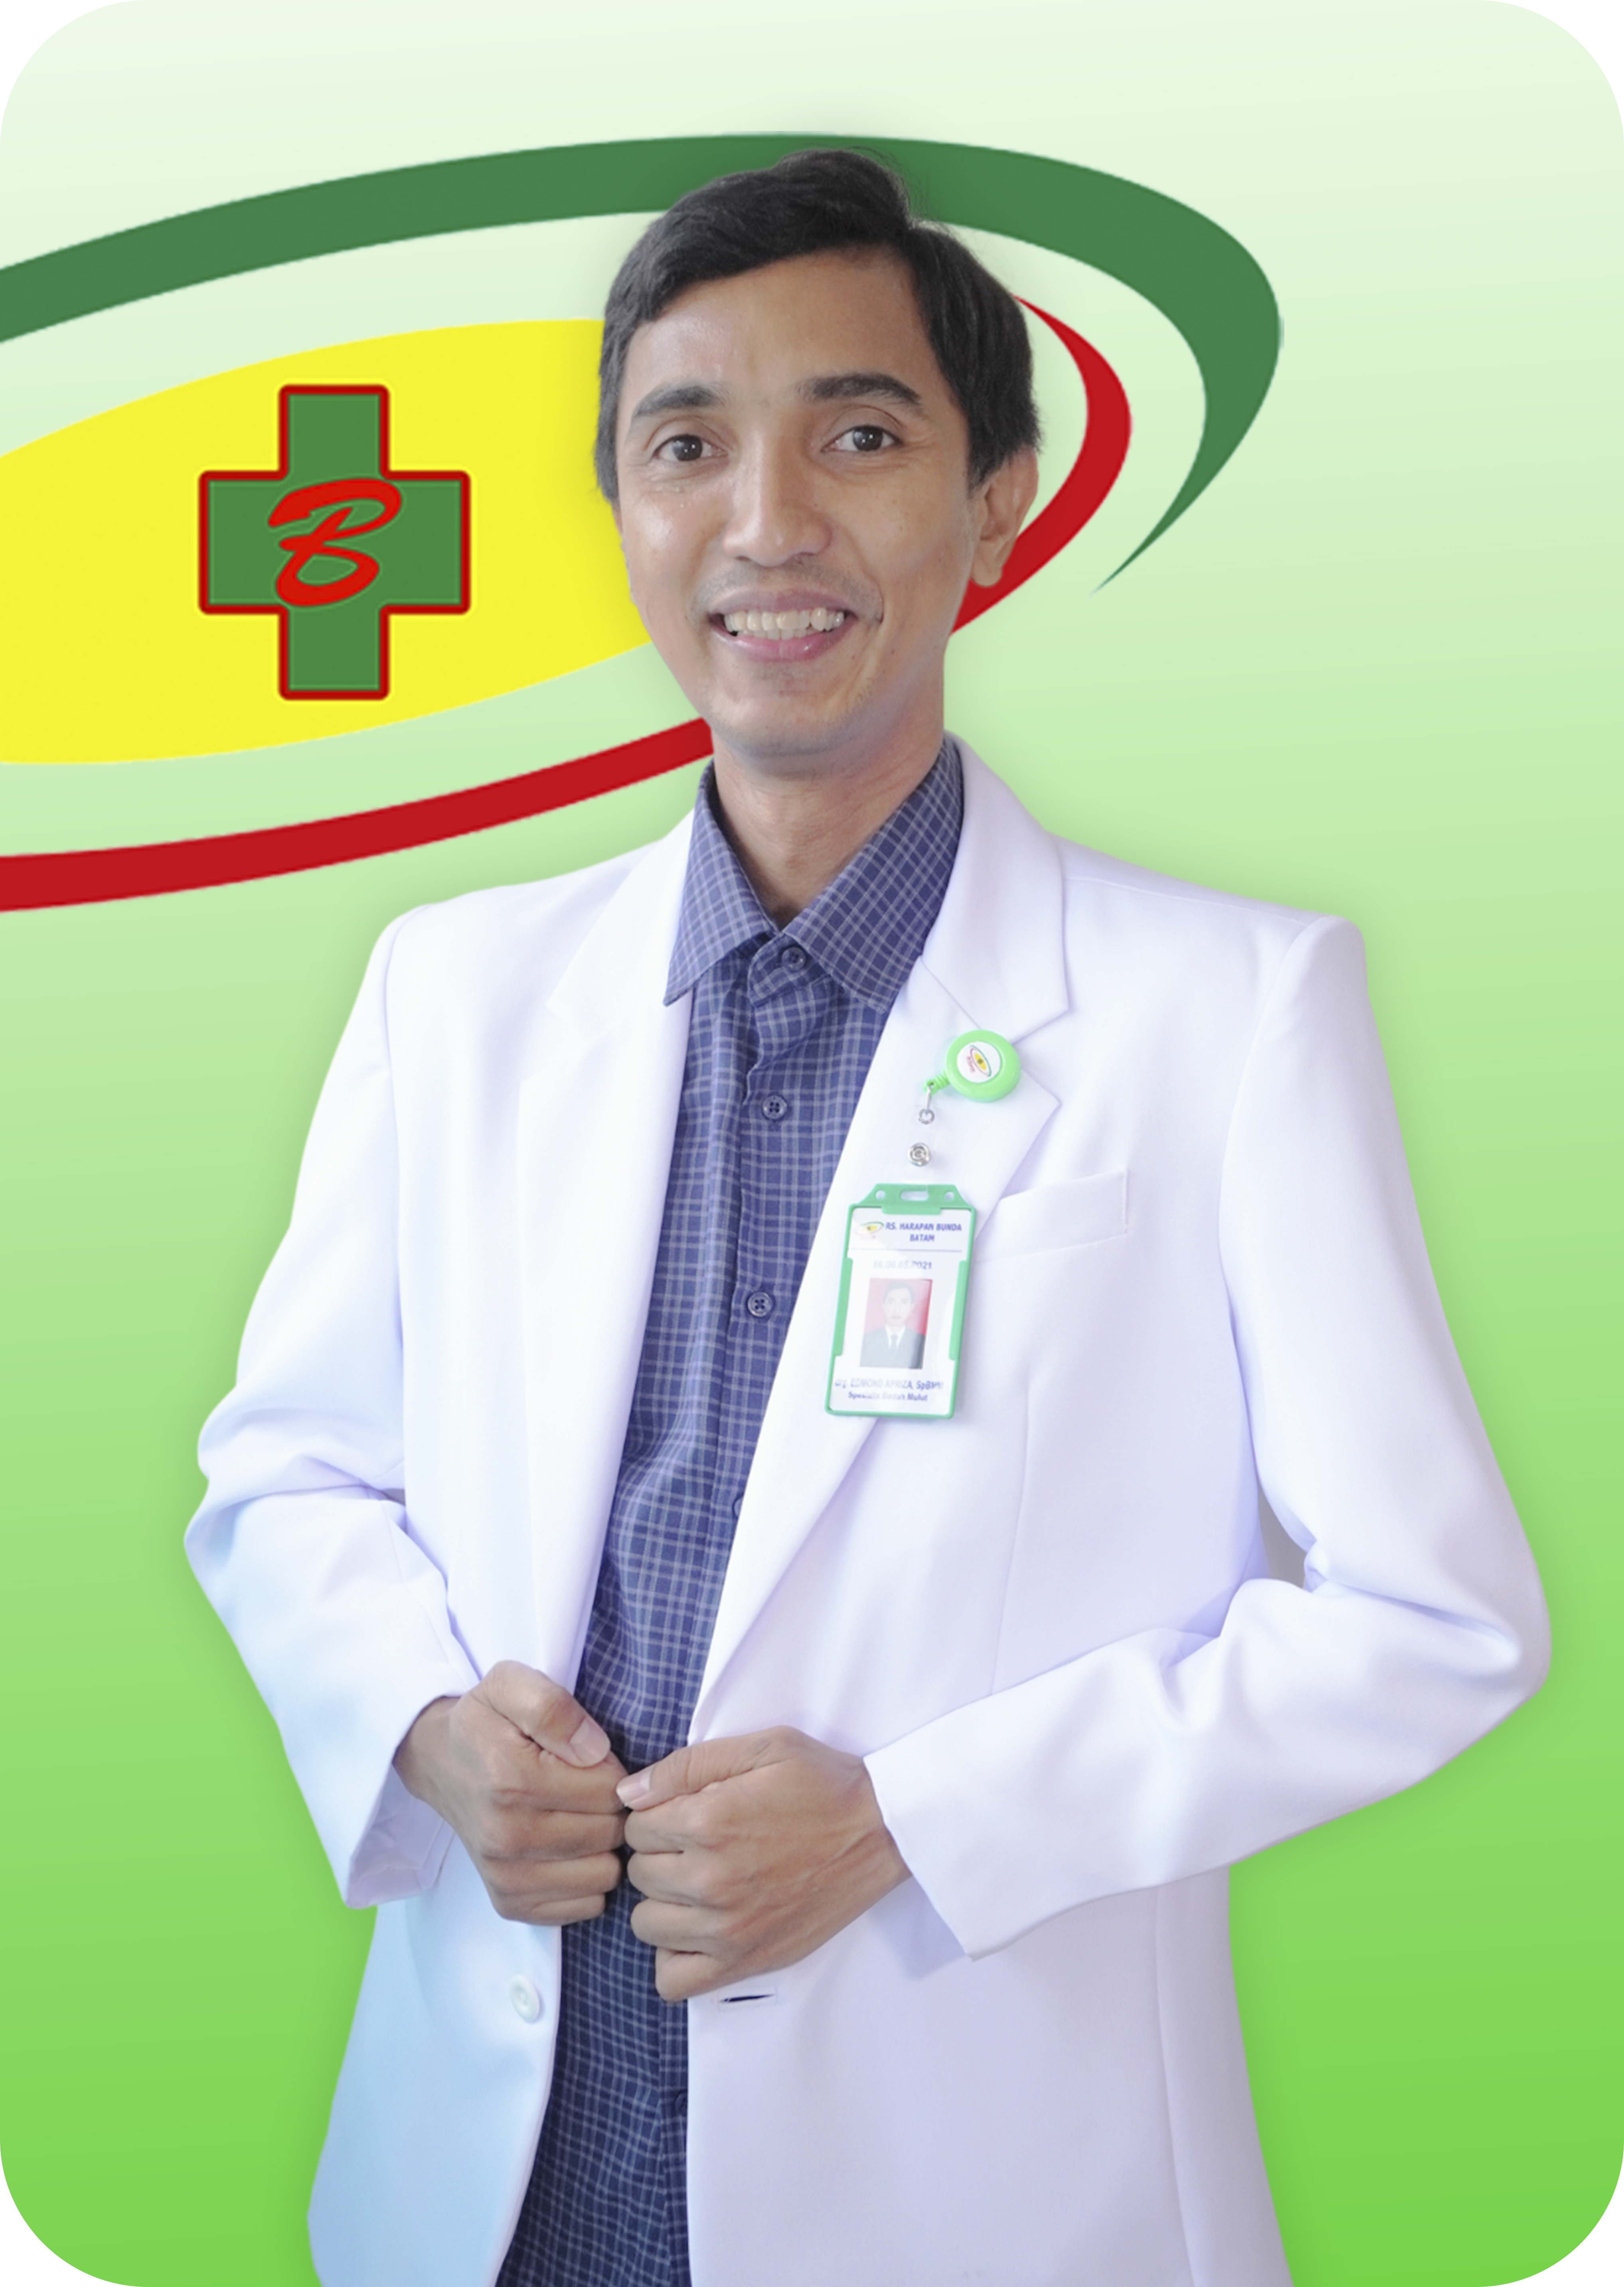 dokter